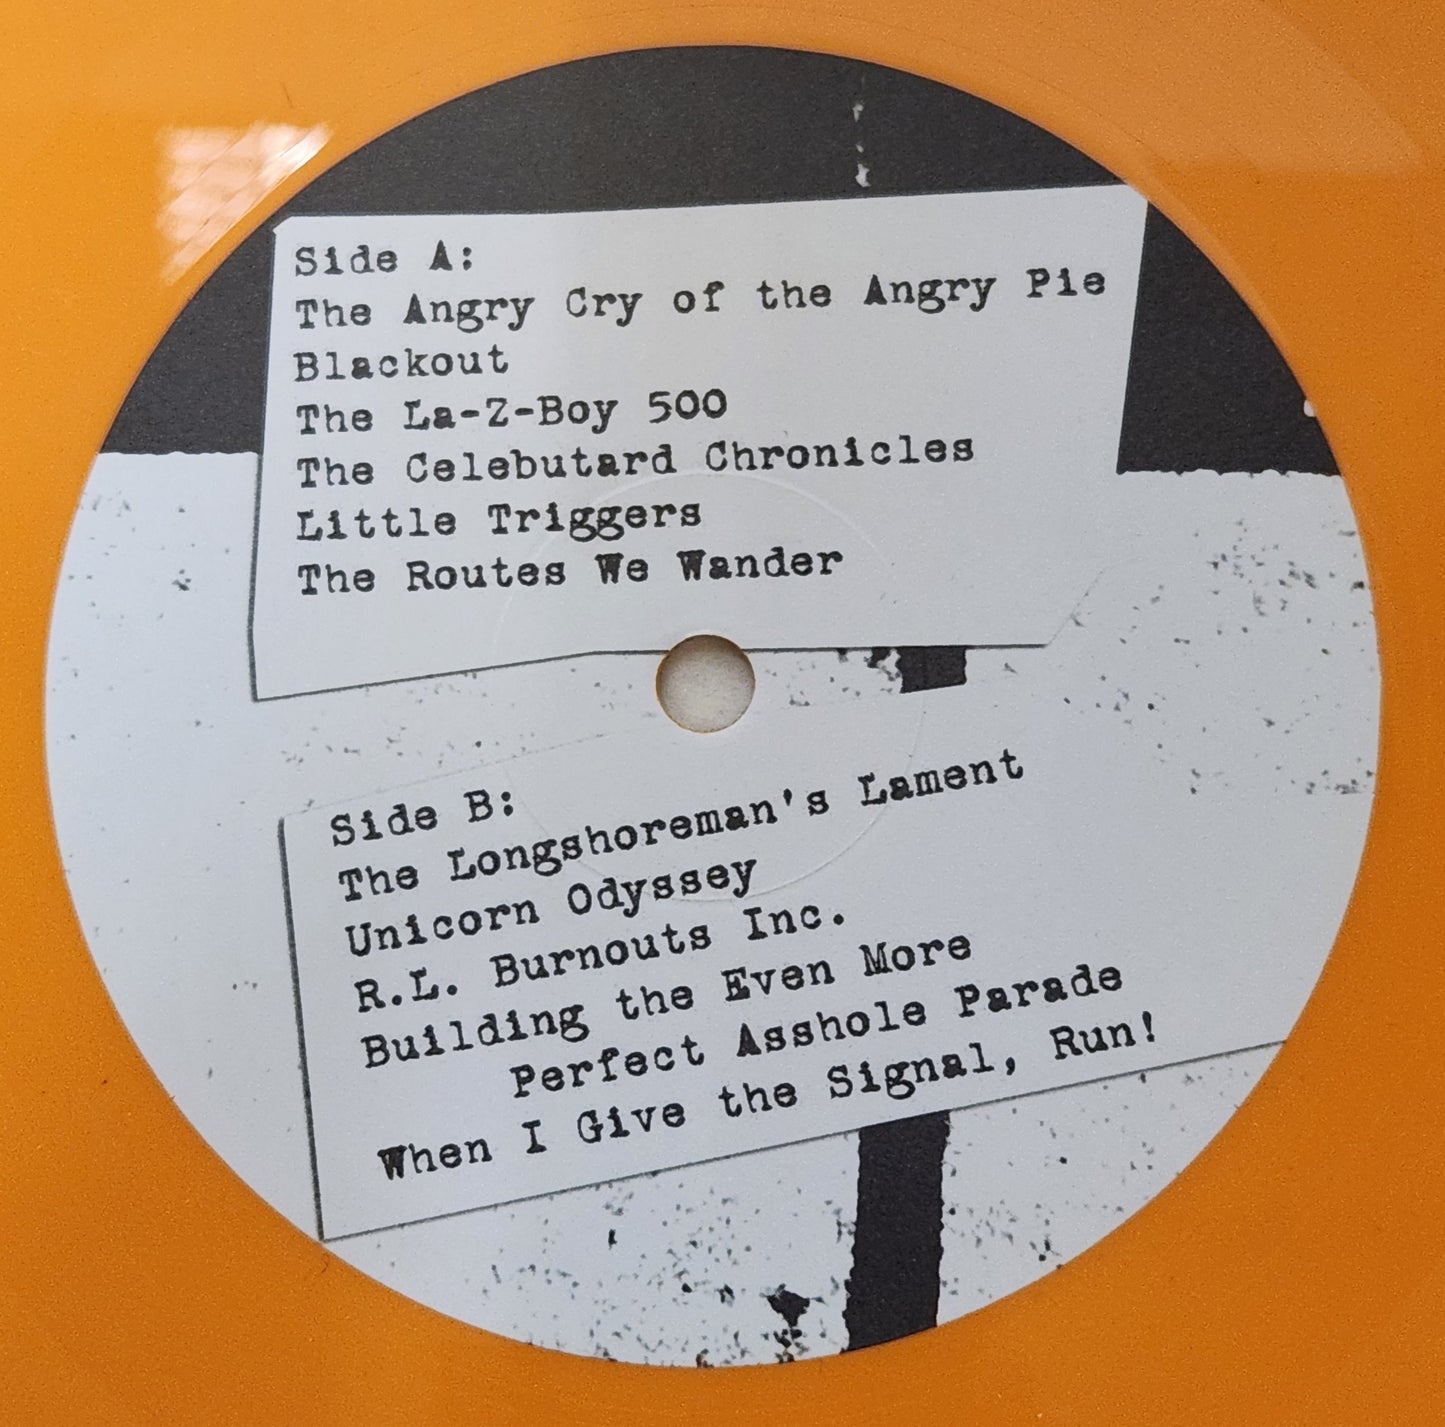 The Falcon "Unicornography" 2006 Punk Orange Vinyl Record Album